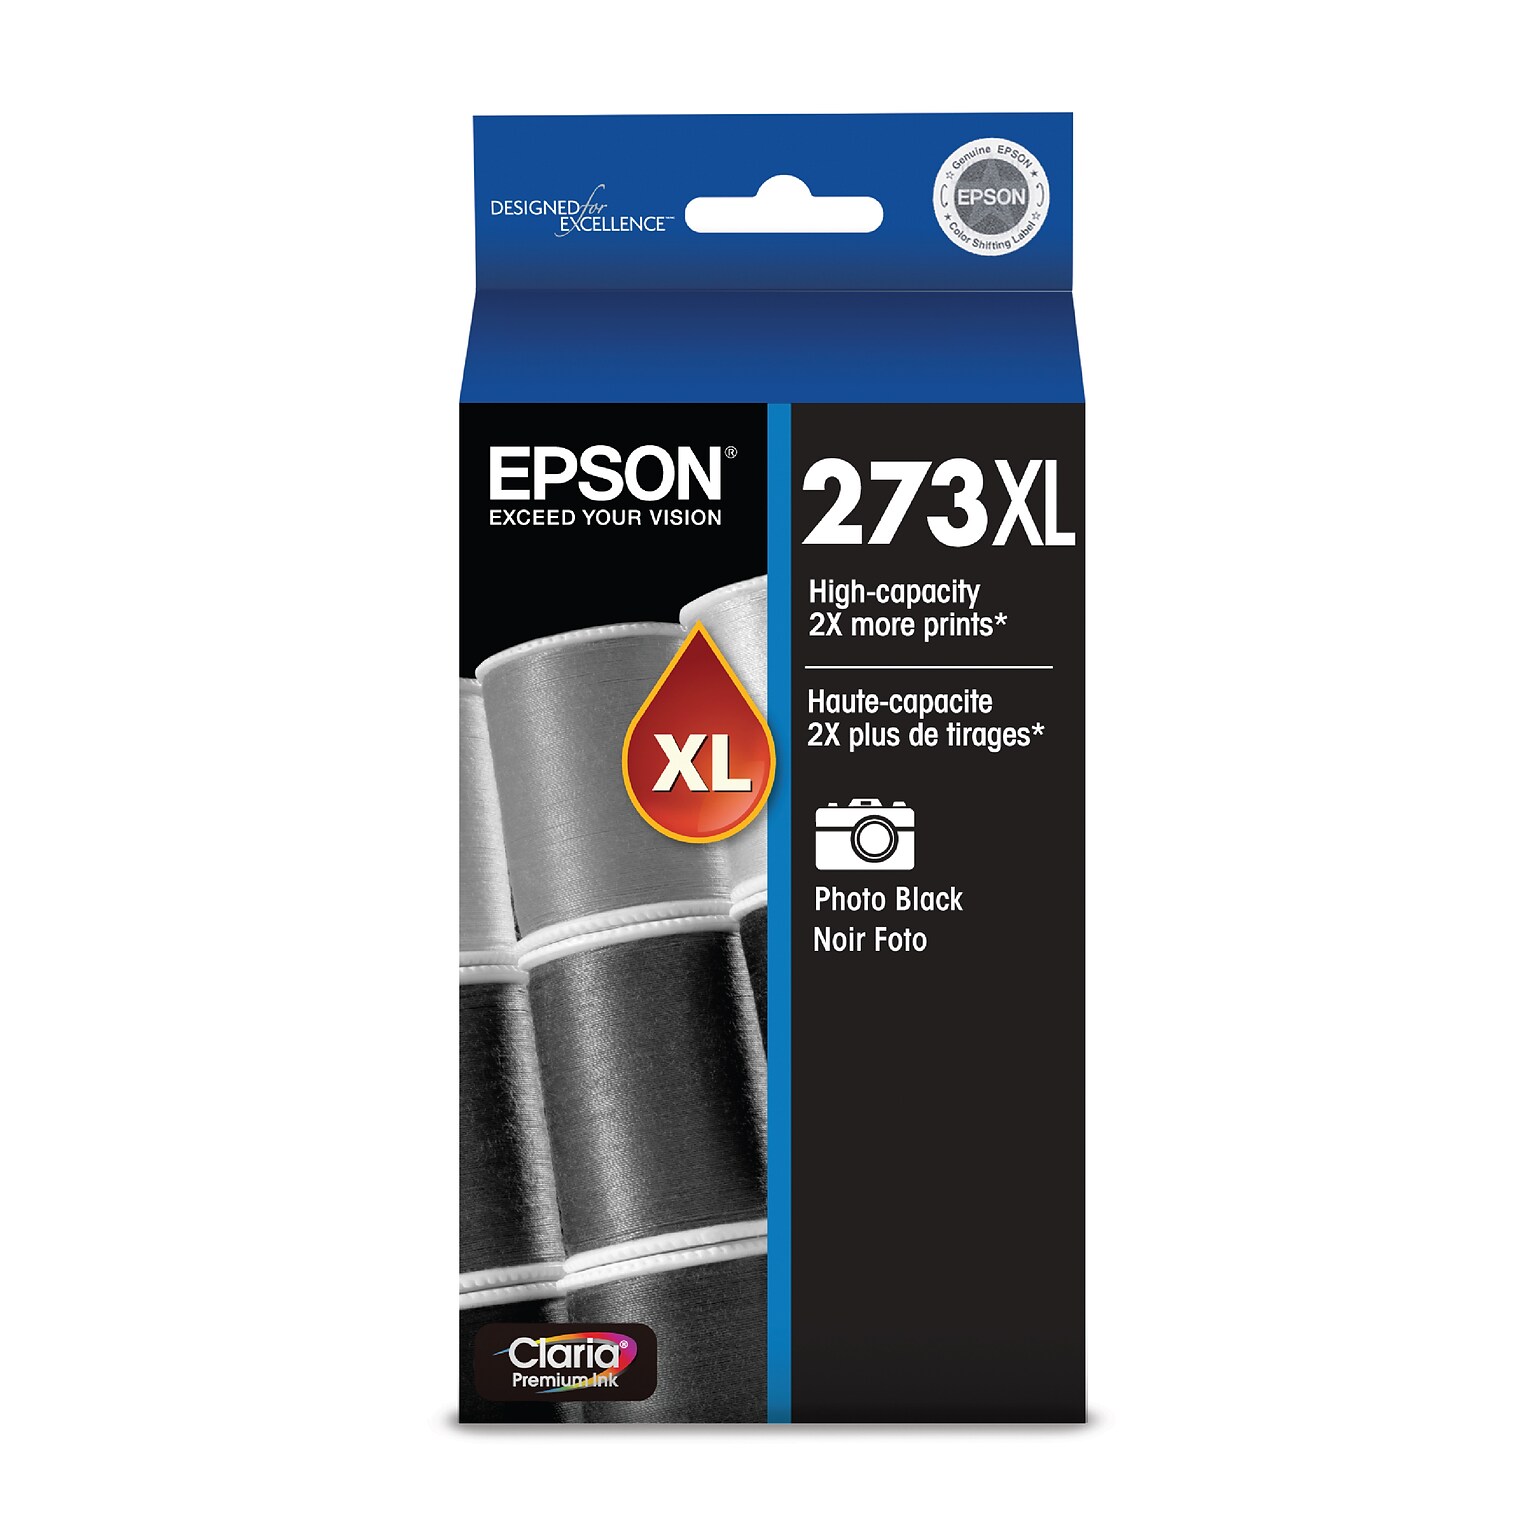 Epson T273XL Photo Black High Yield Ink Cartridge